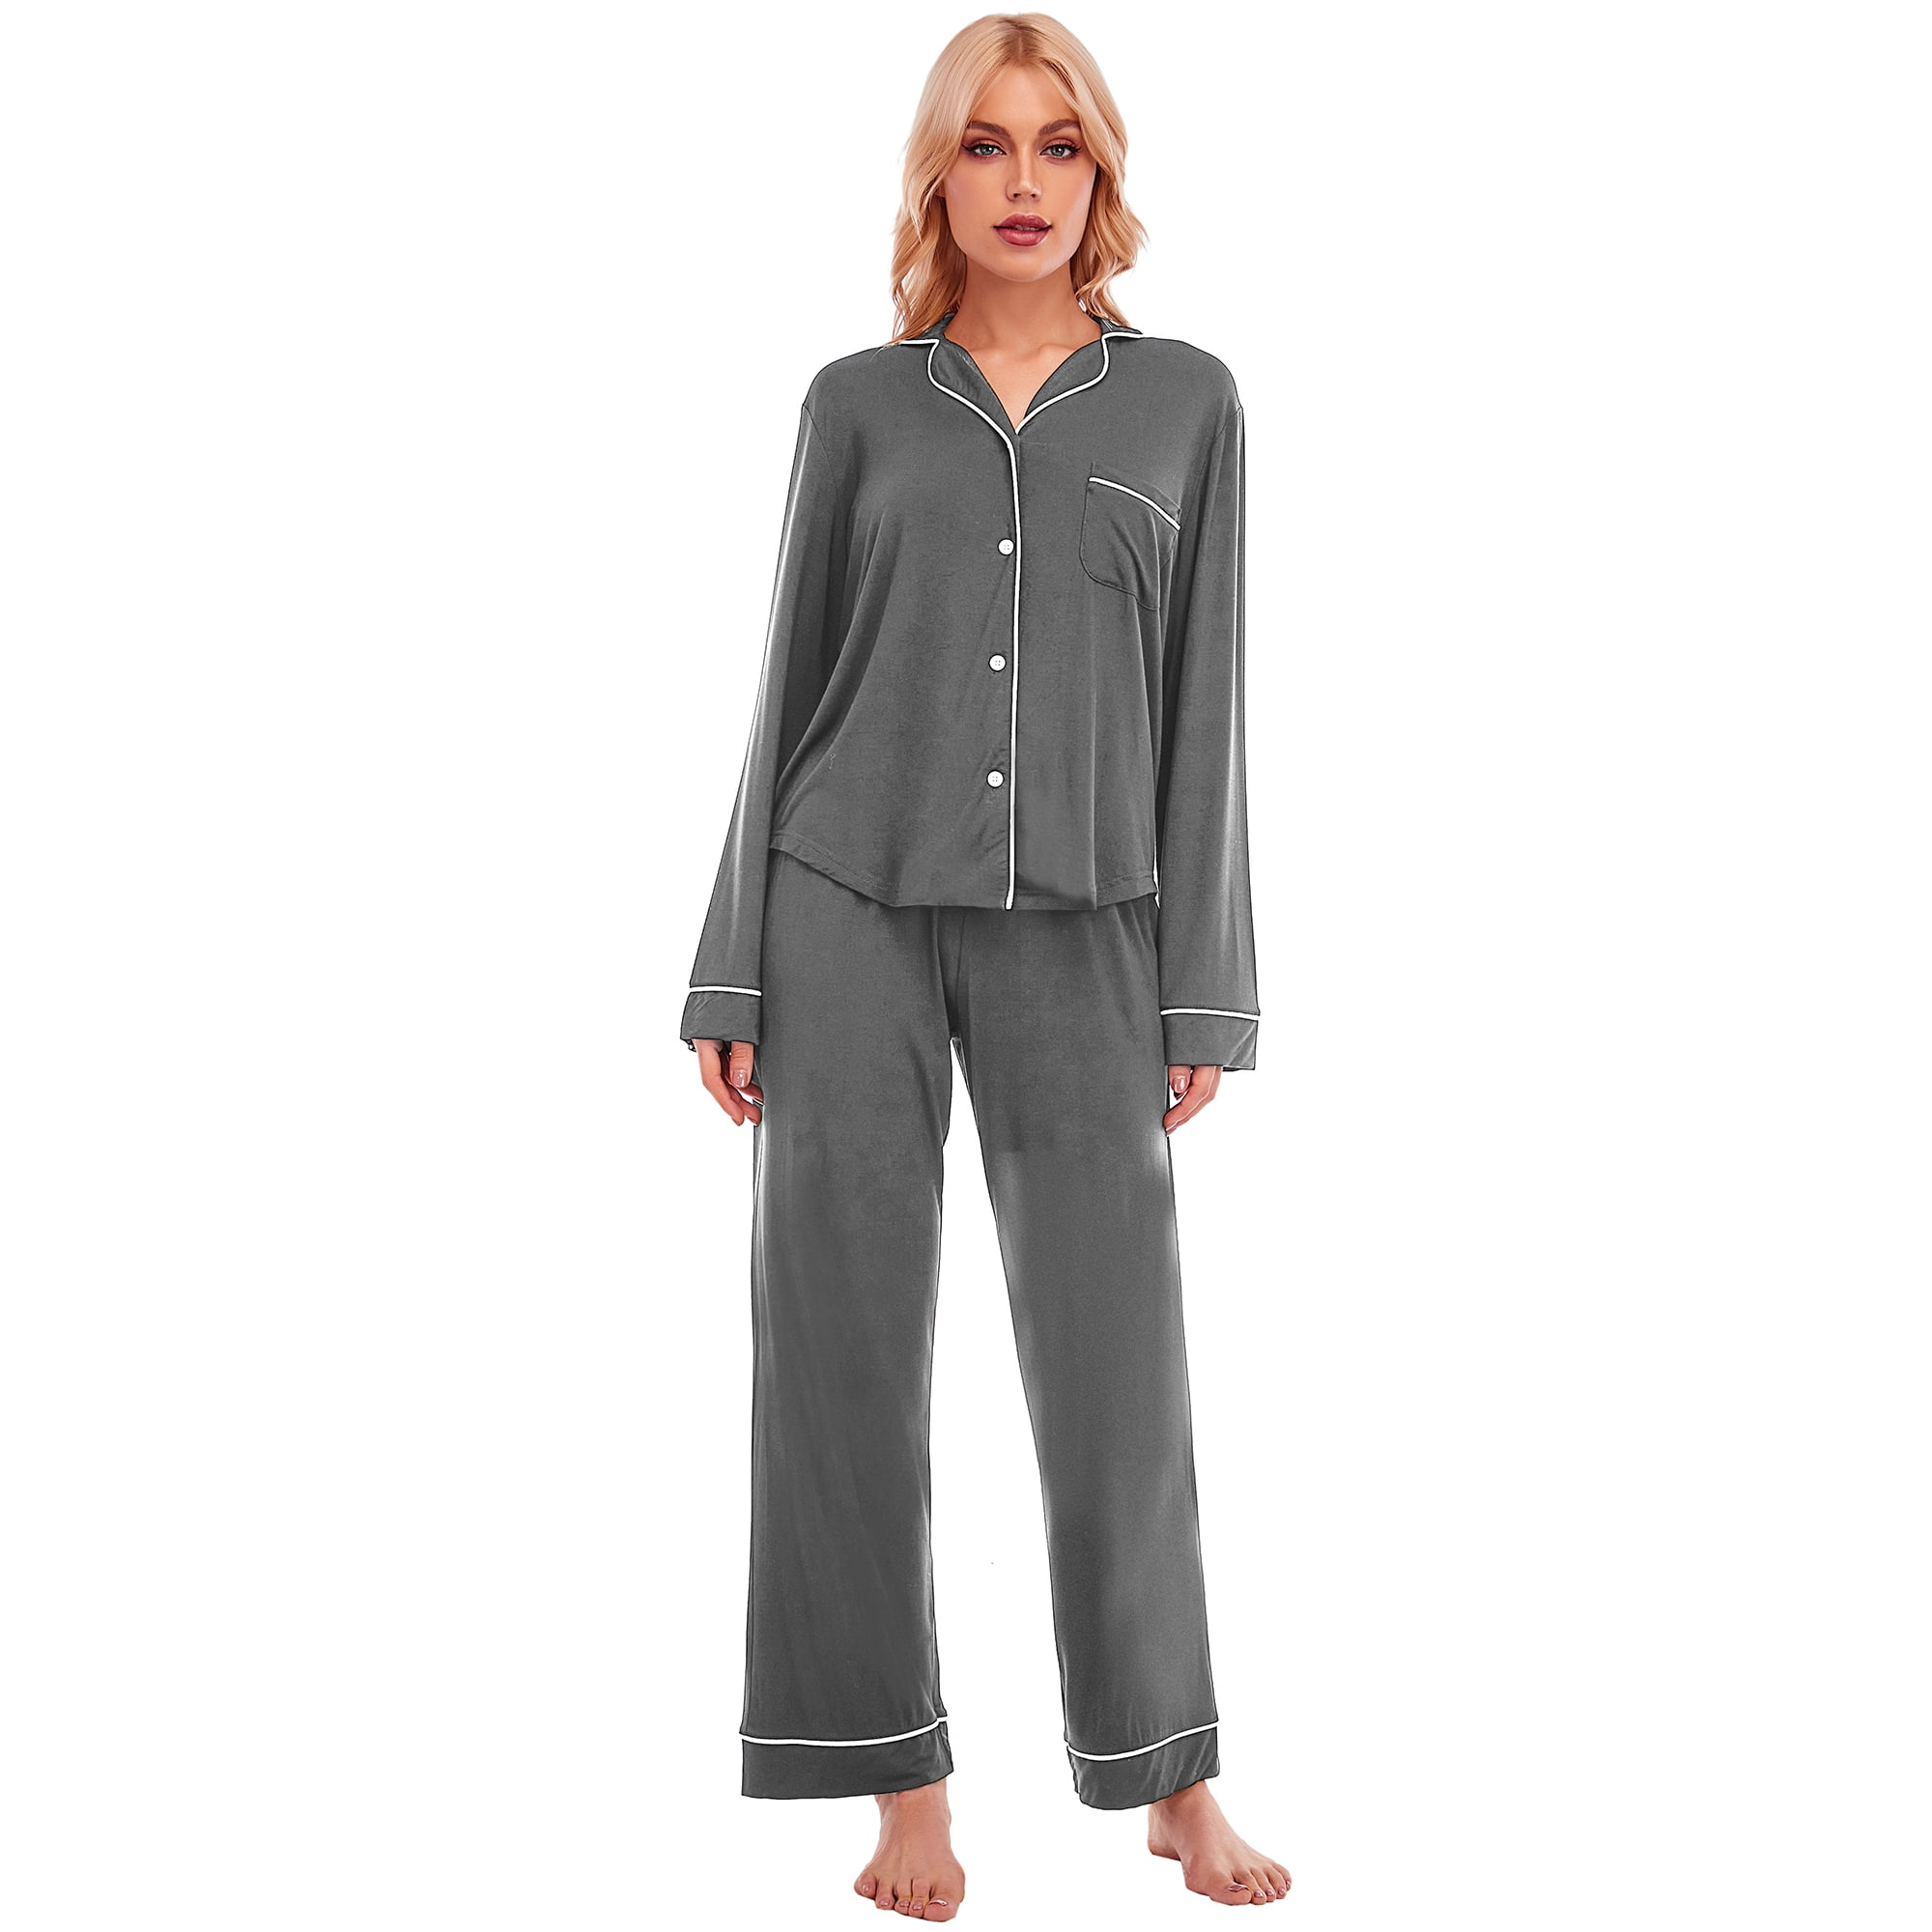 GEX Cotton Women's Pajamas Set Button-Down Long Short Sleeve Shirt